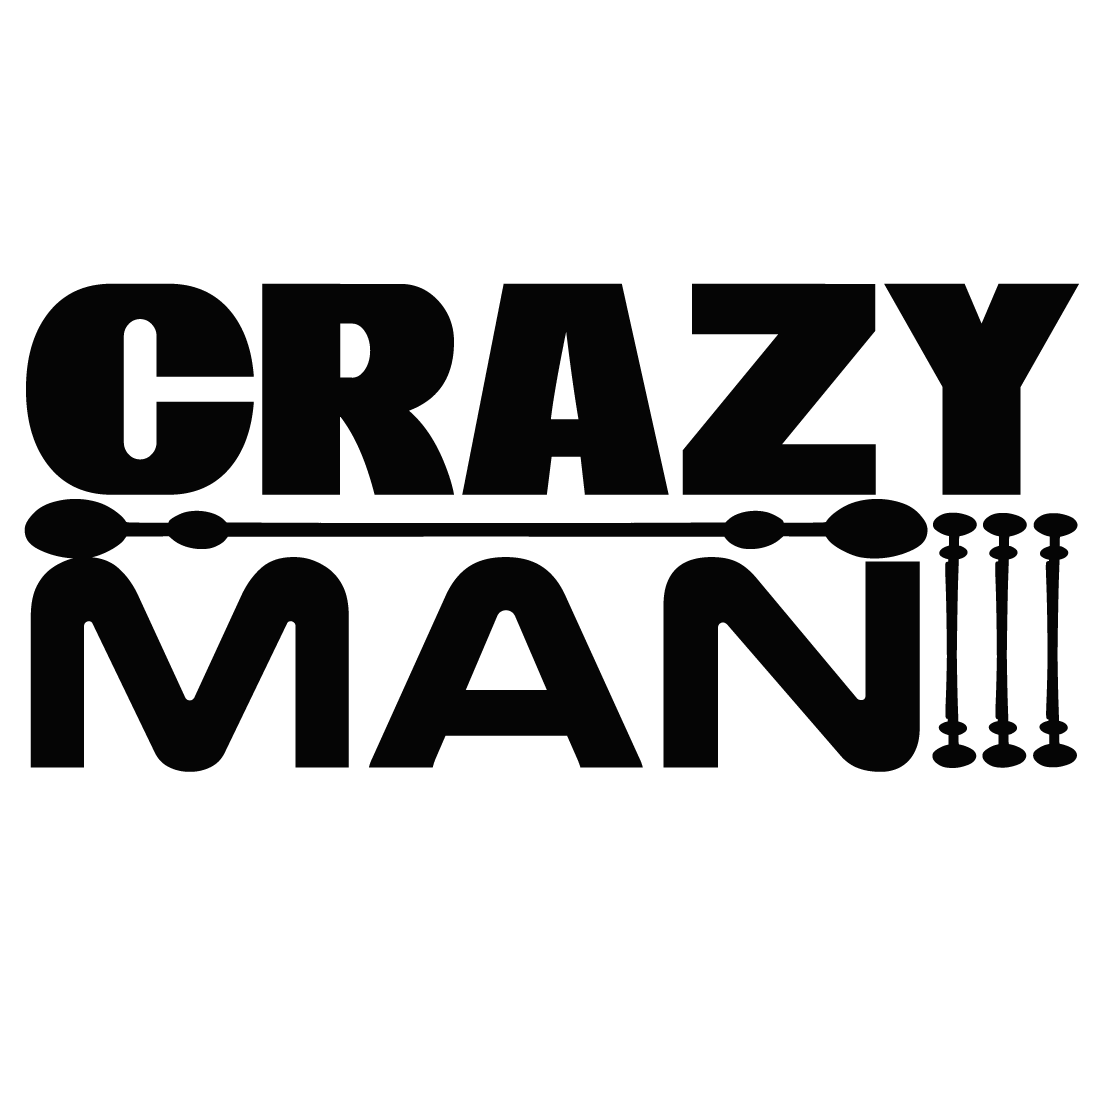 crazy Man preview image.